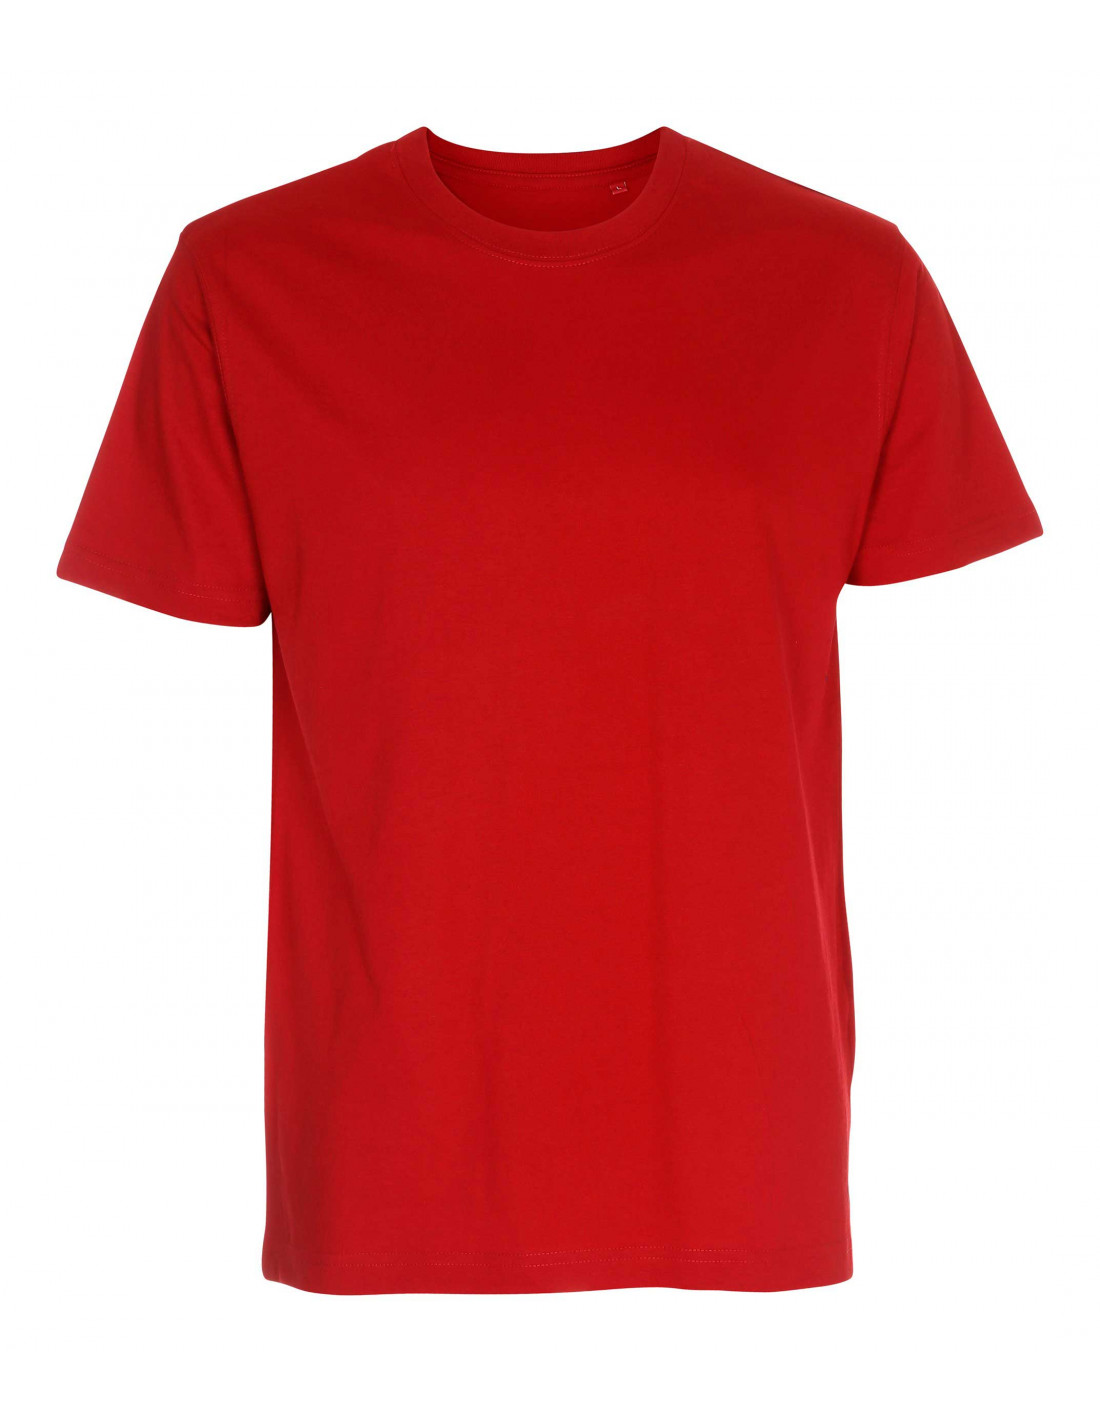 https://www.rudecru.com/eu/27680-thickbox_default/premium-t-shirt-red.jpg